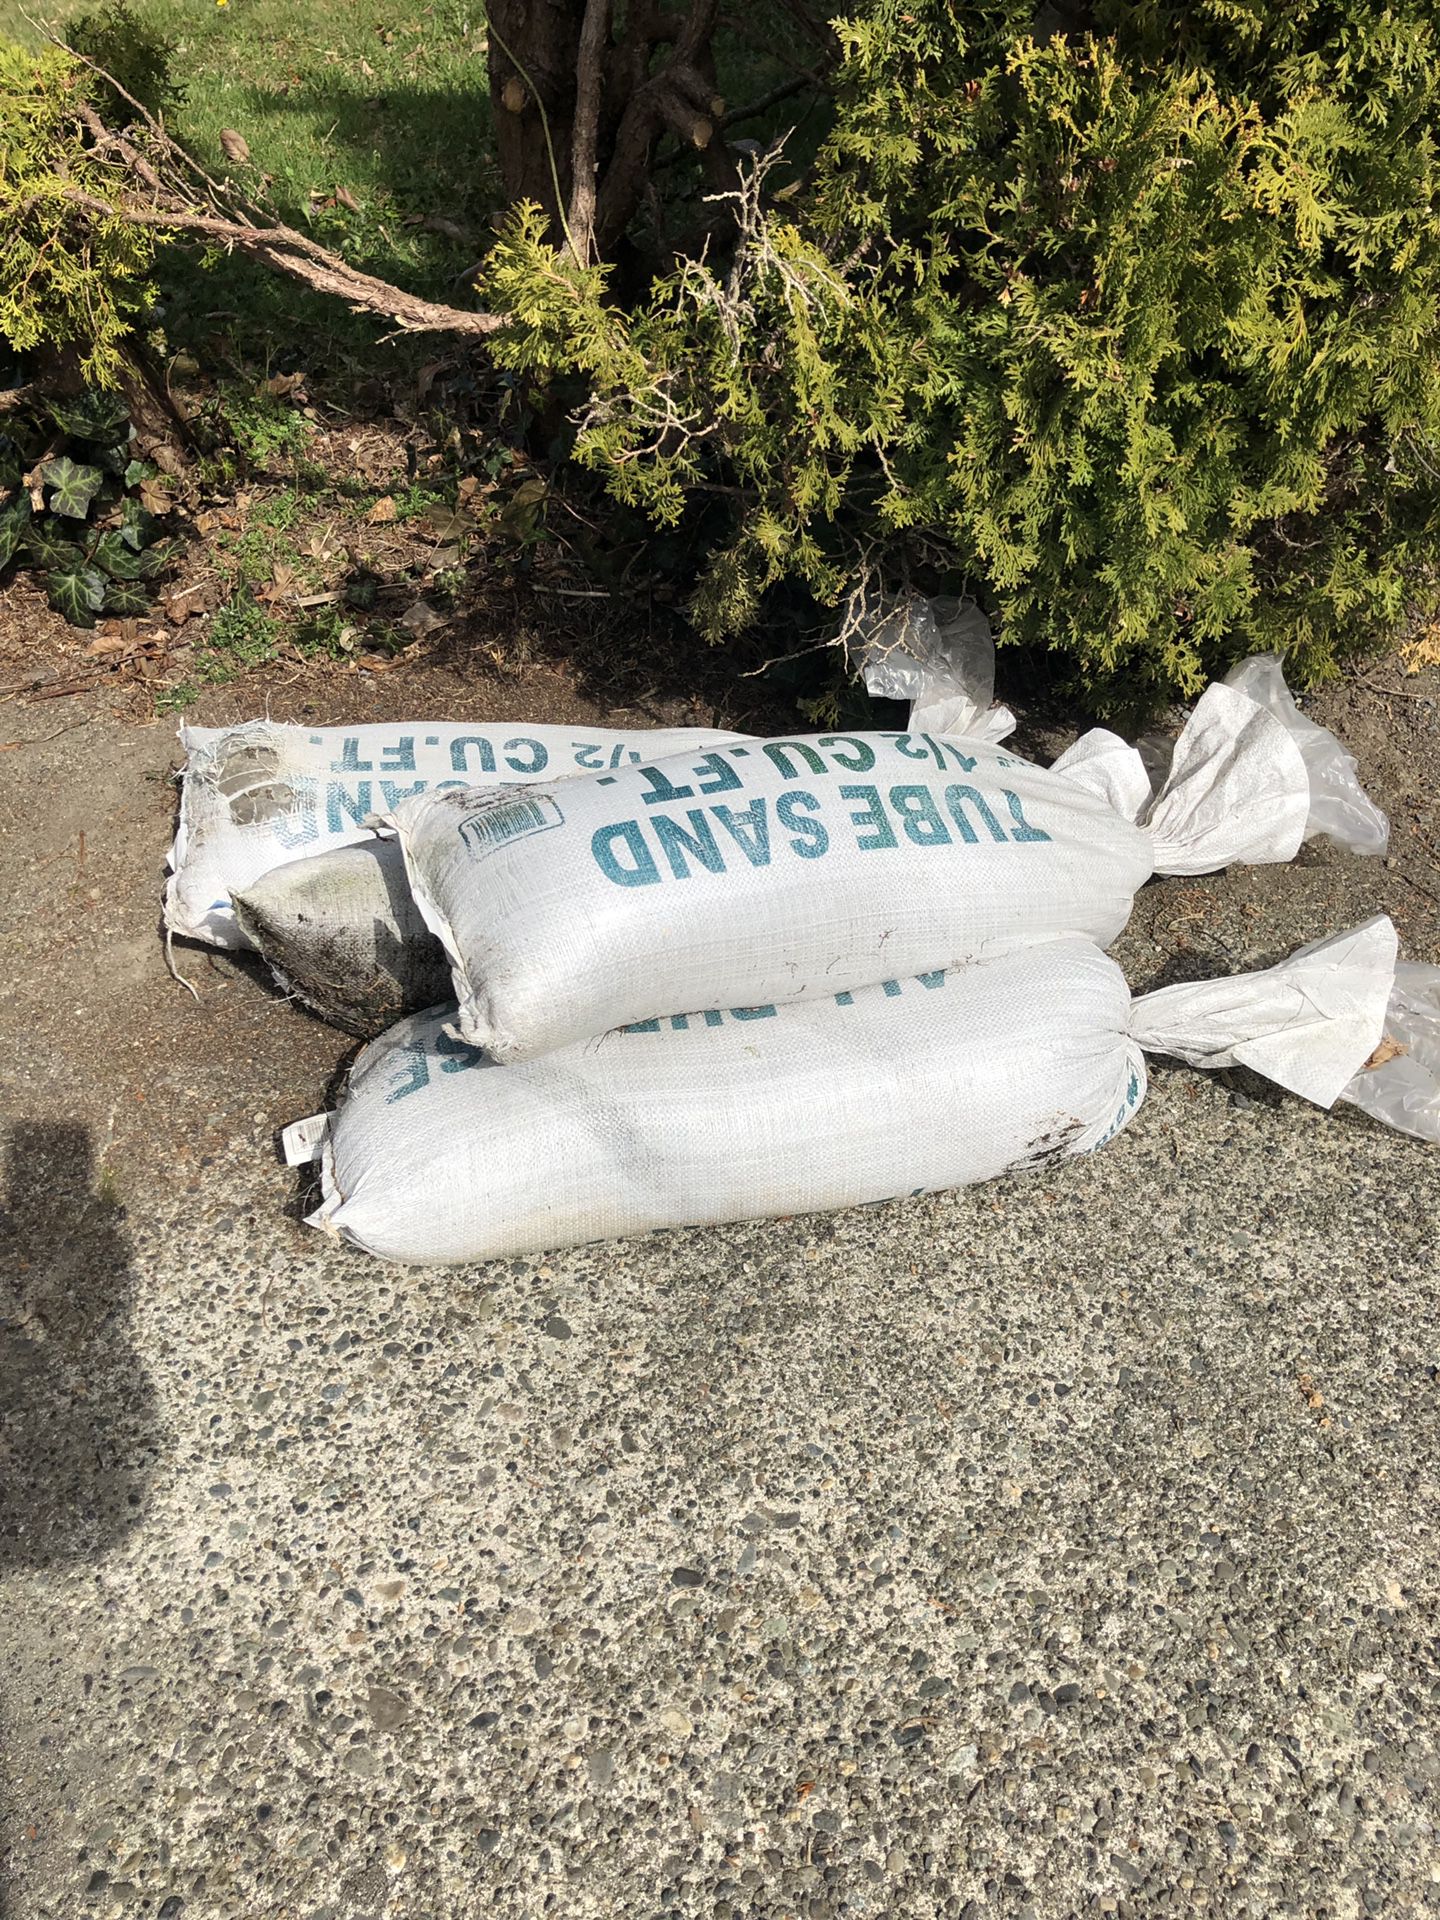 Free sandbags